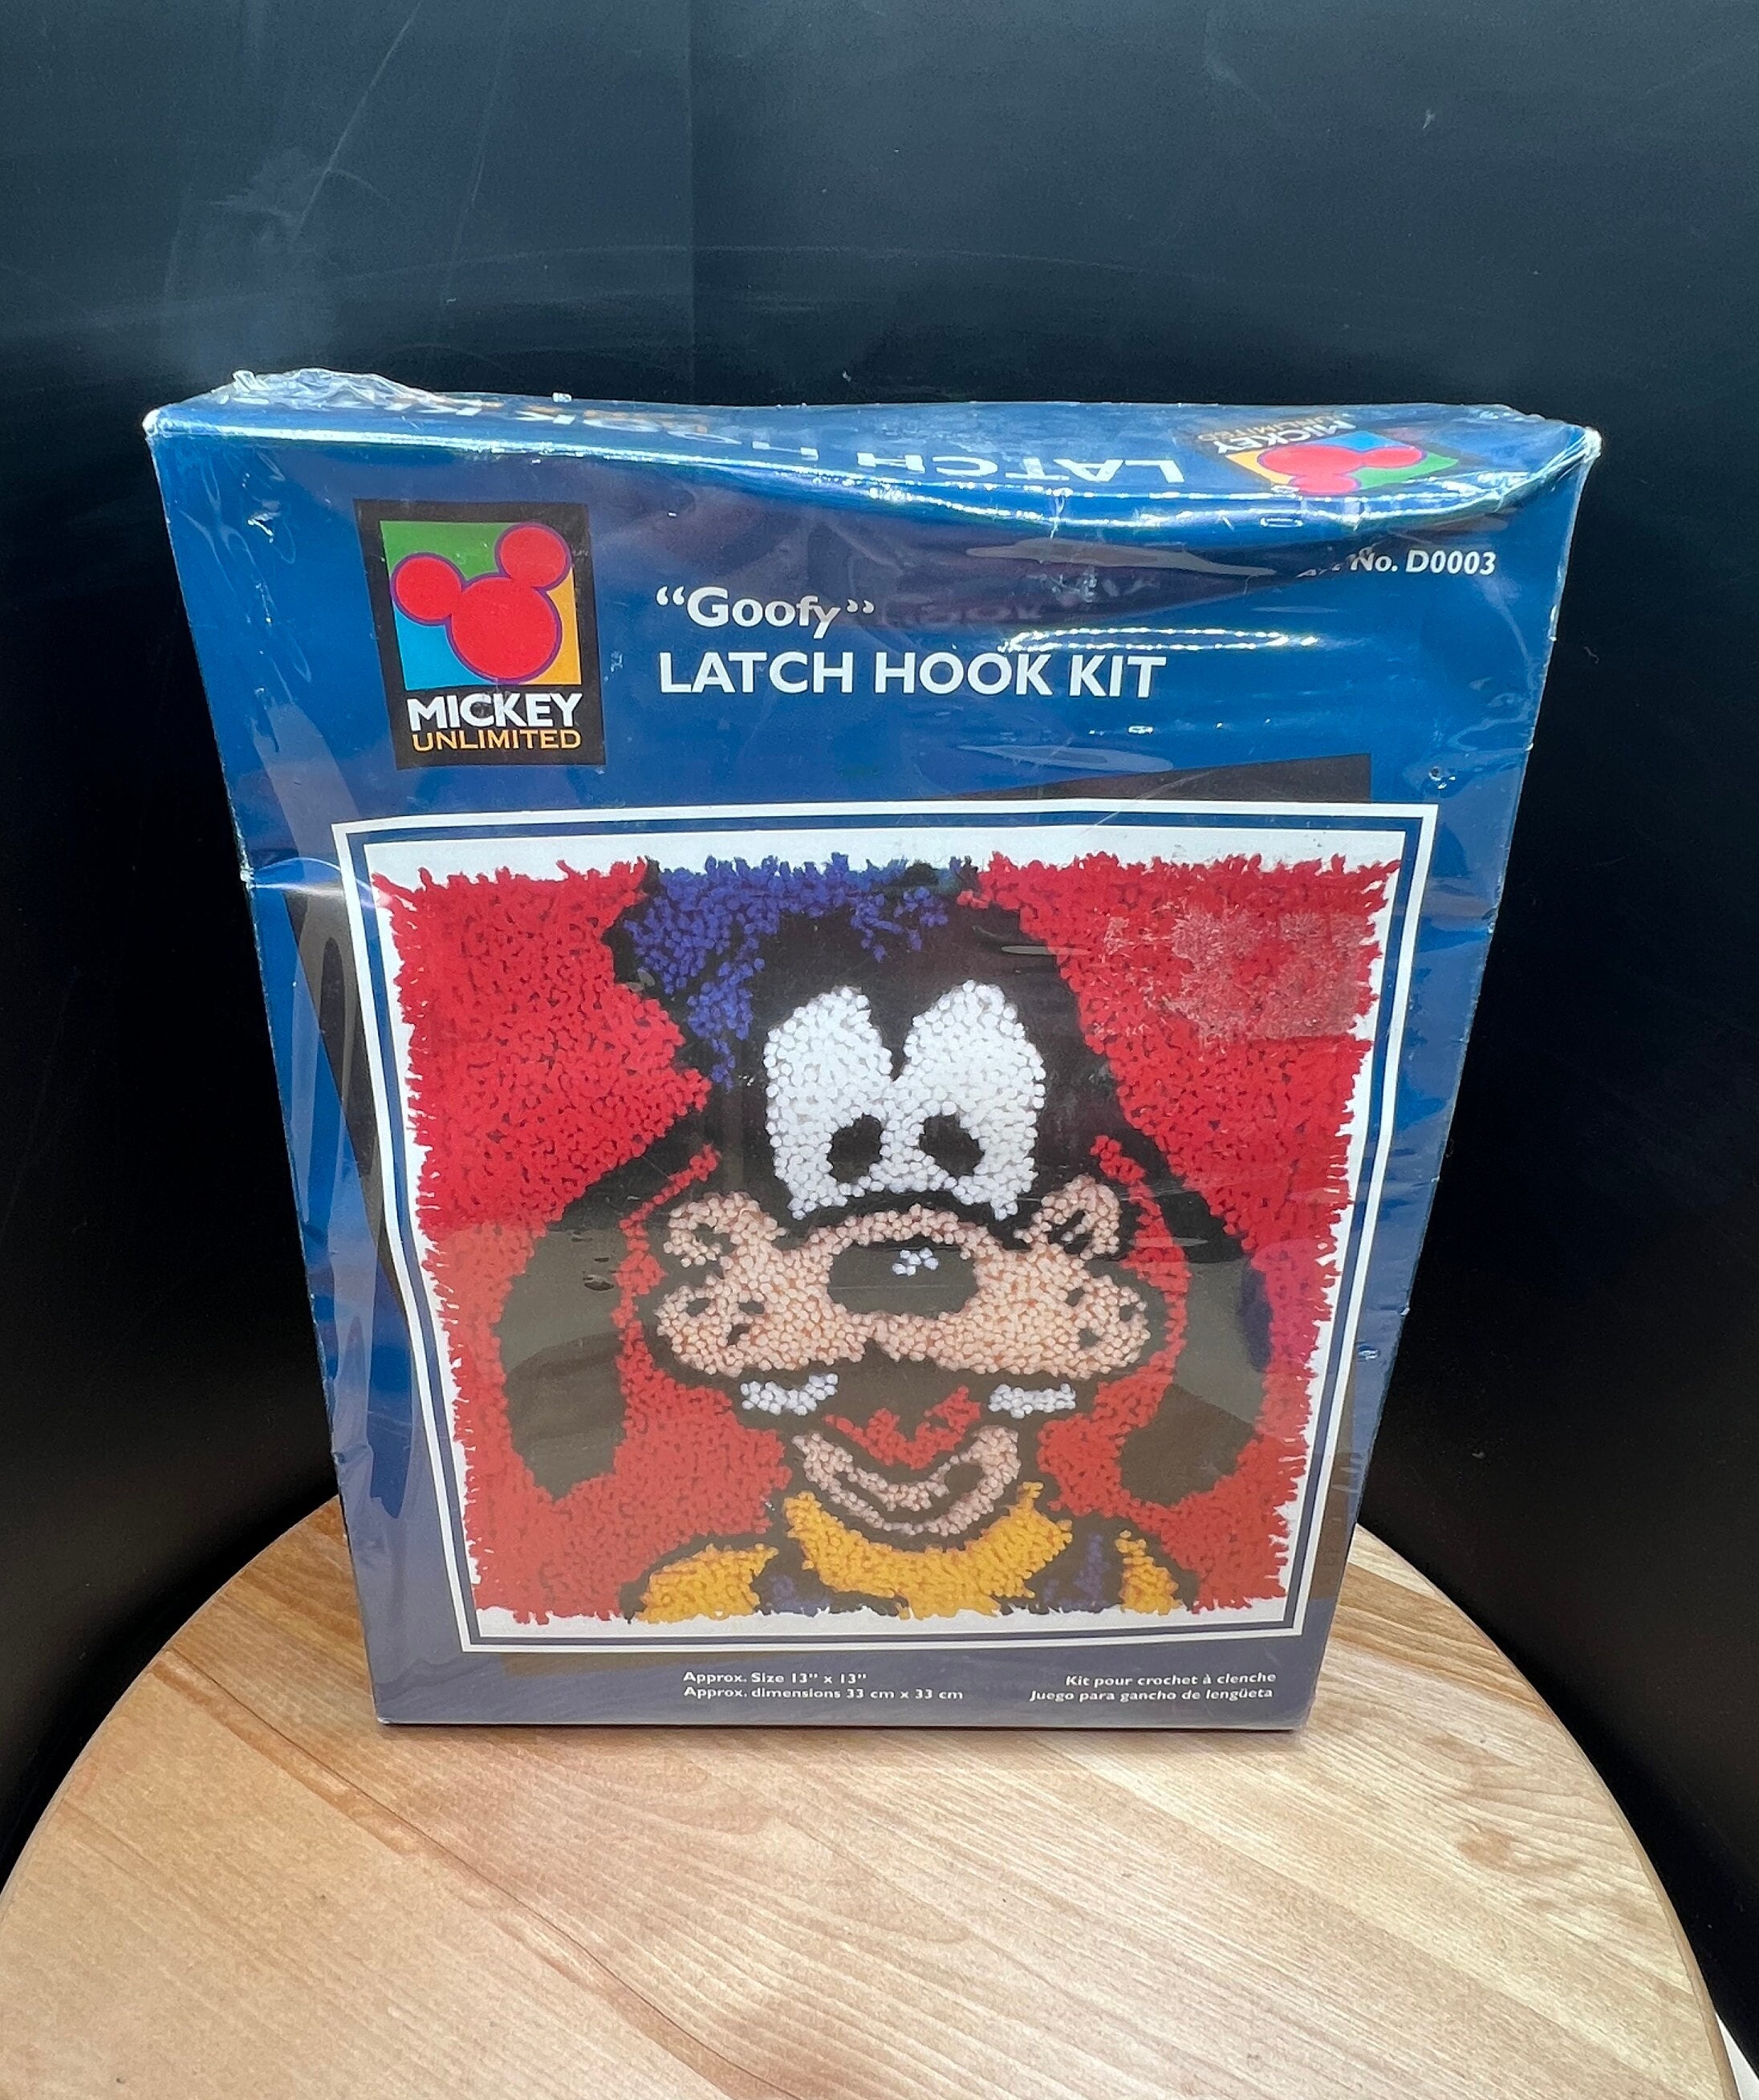 Vintage Mickey unlimited “goofy” latch hook kit in box